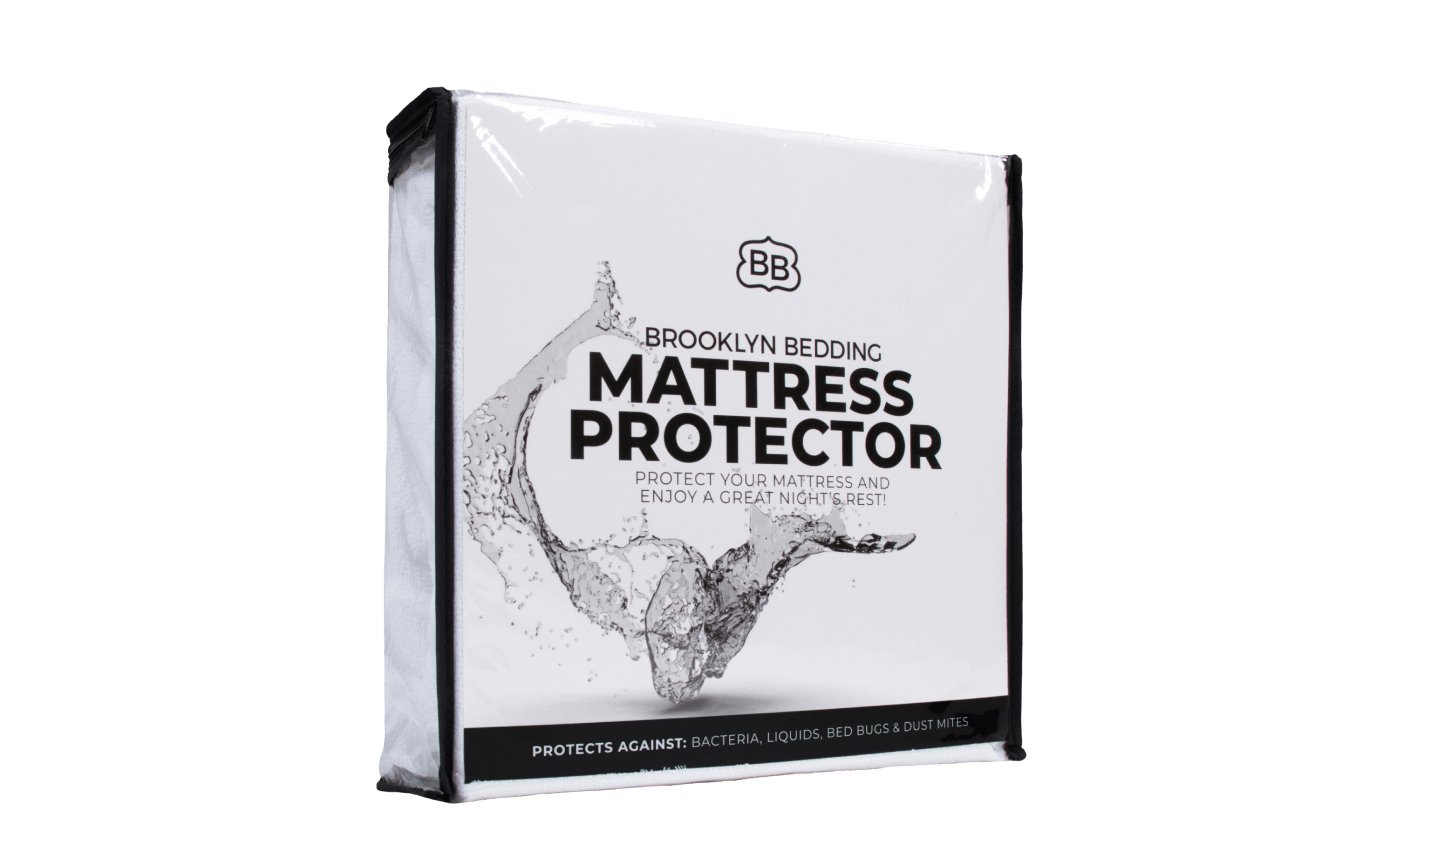 ultrablock mattress protector reviews